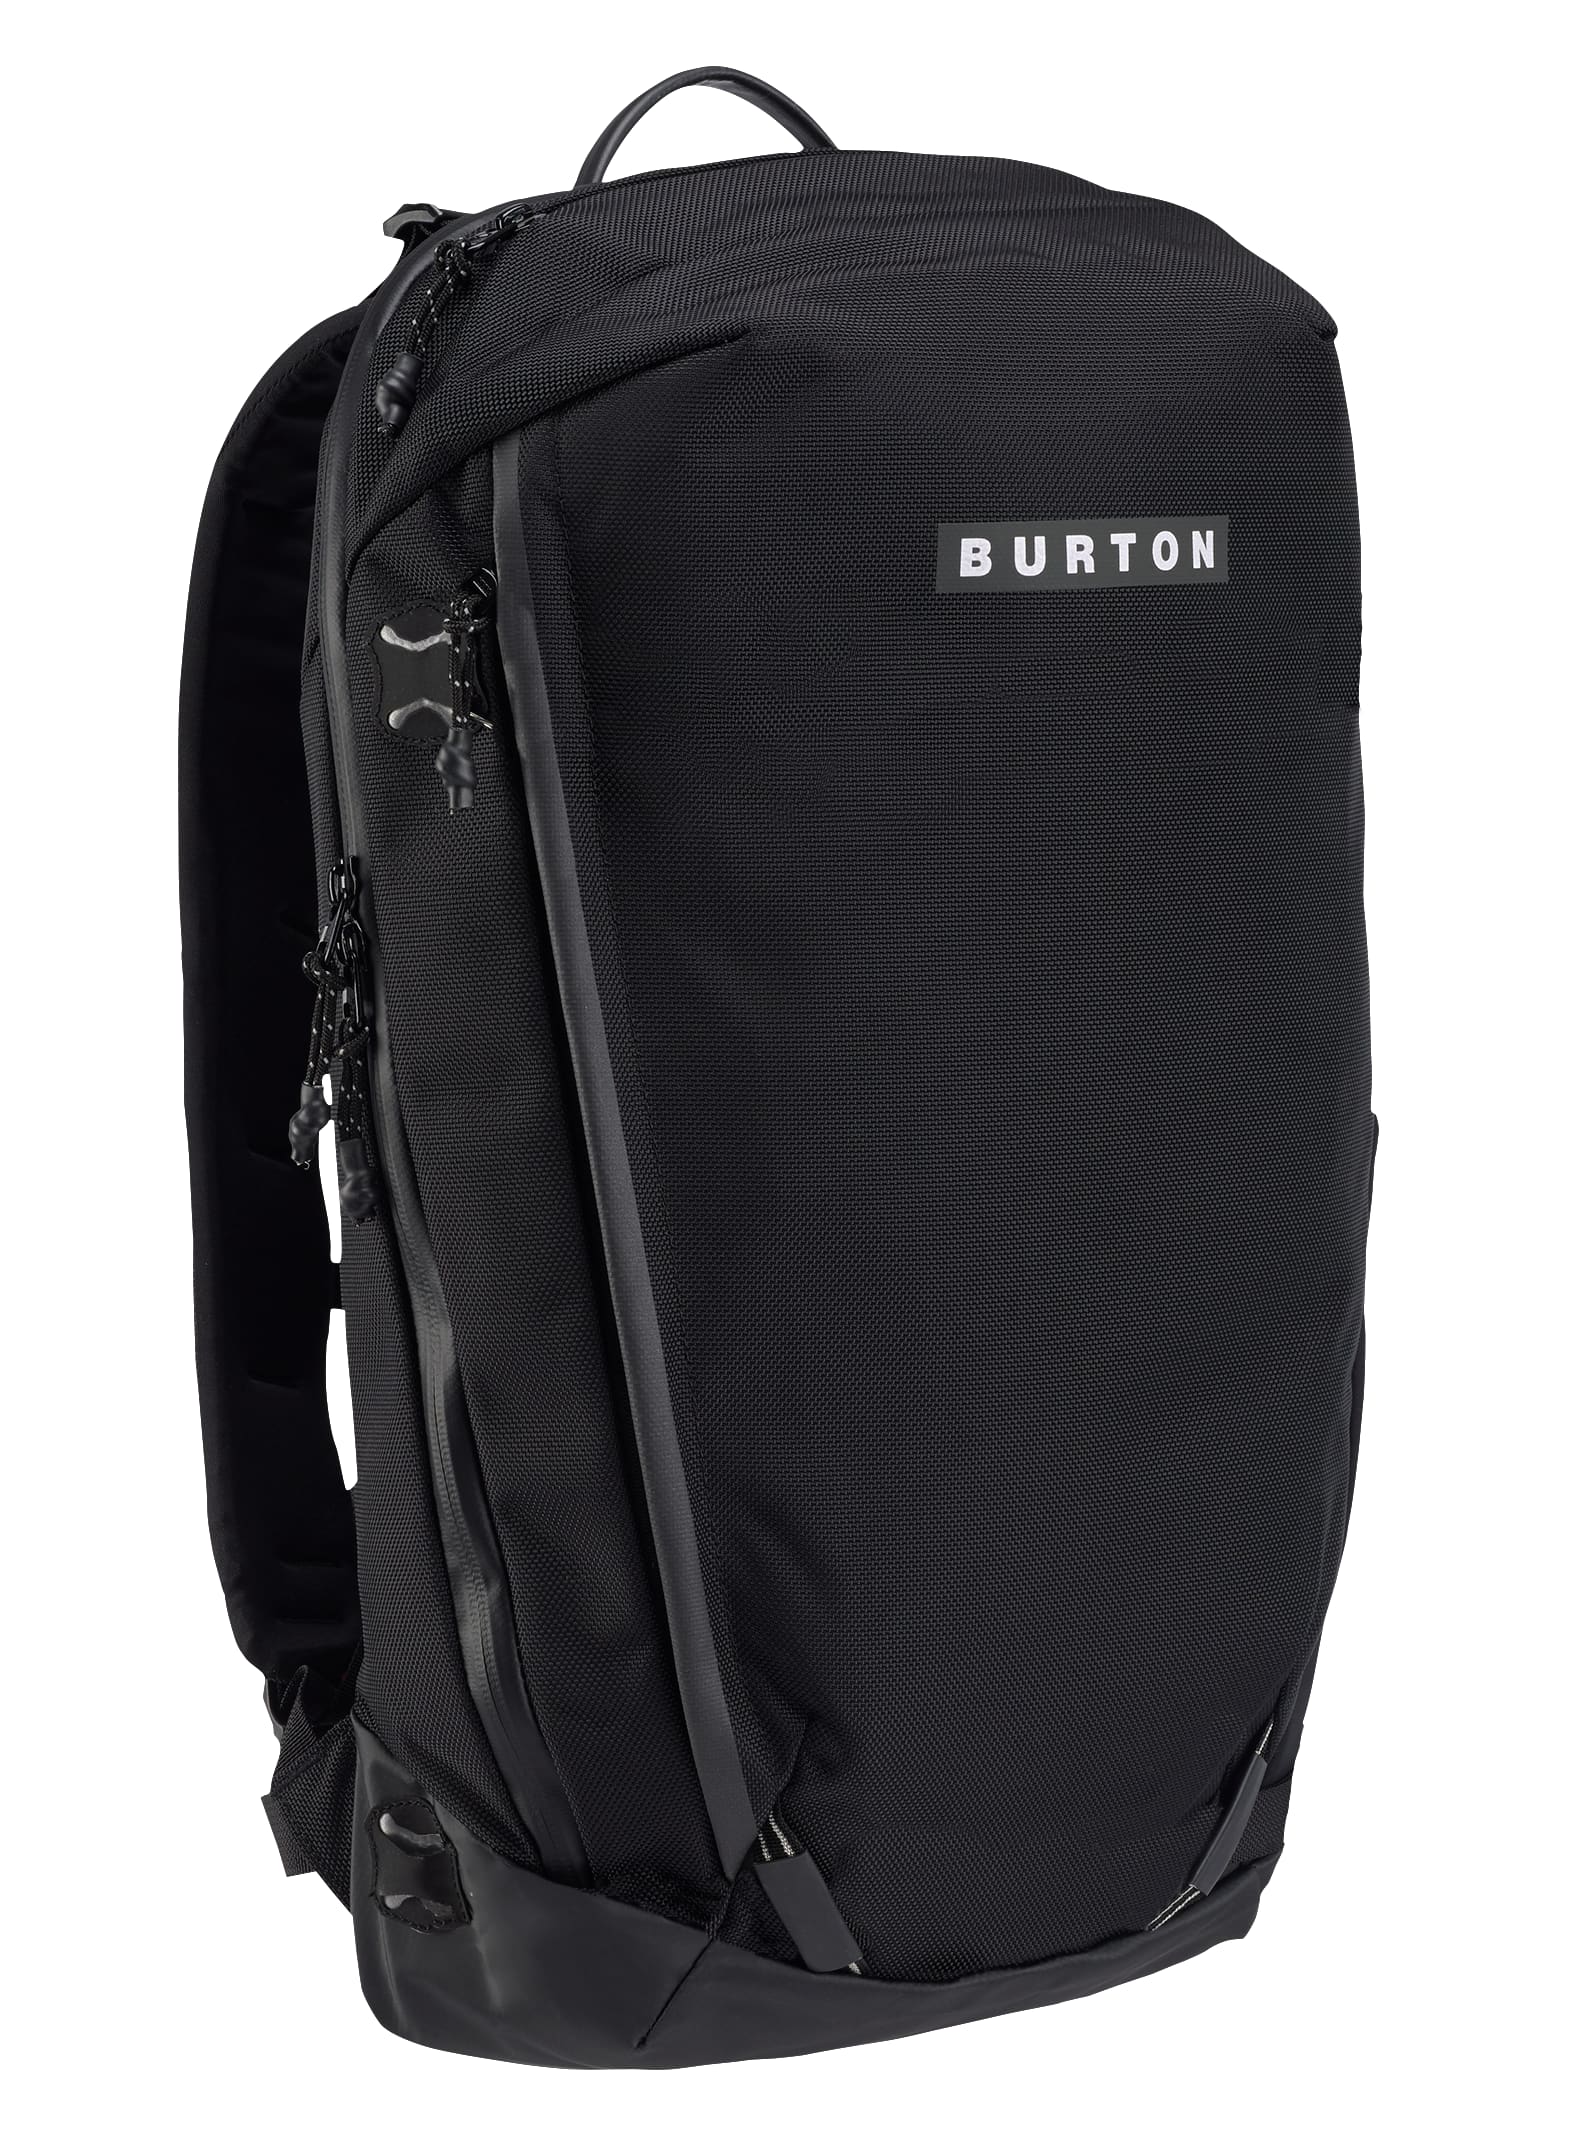 Burton Gorge 20L Backpack | Burton.com Spring 2021 US